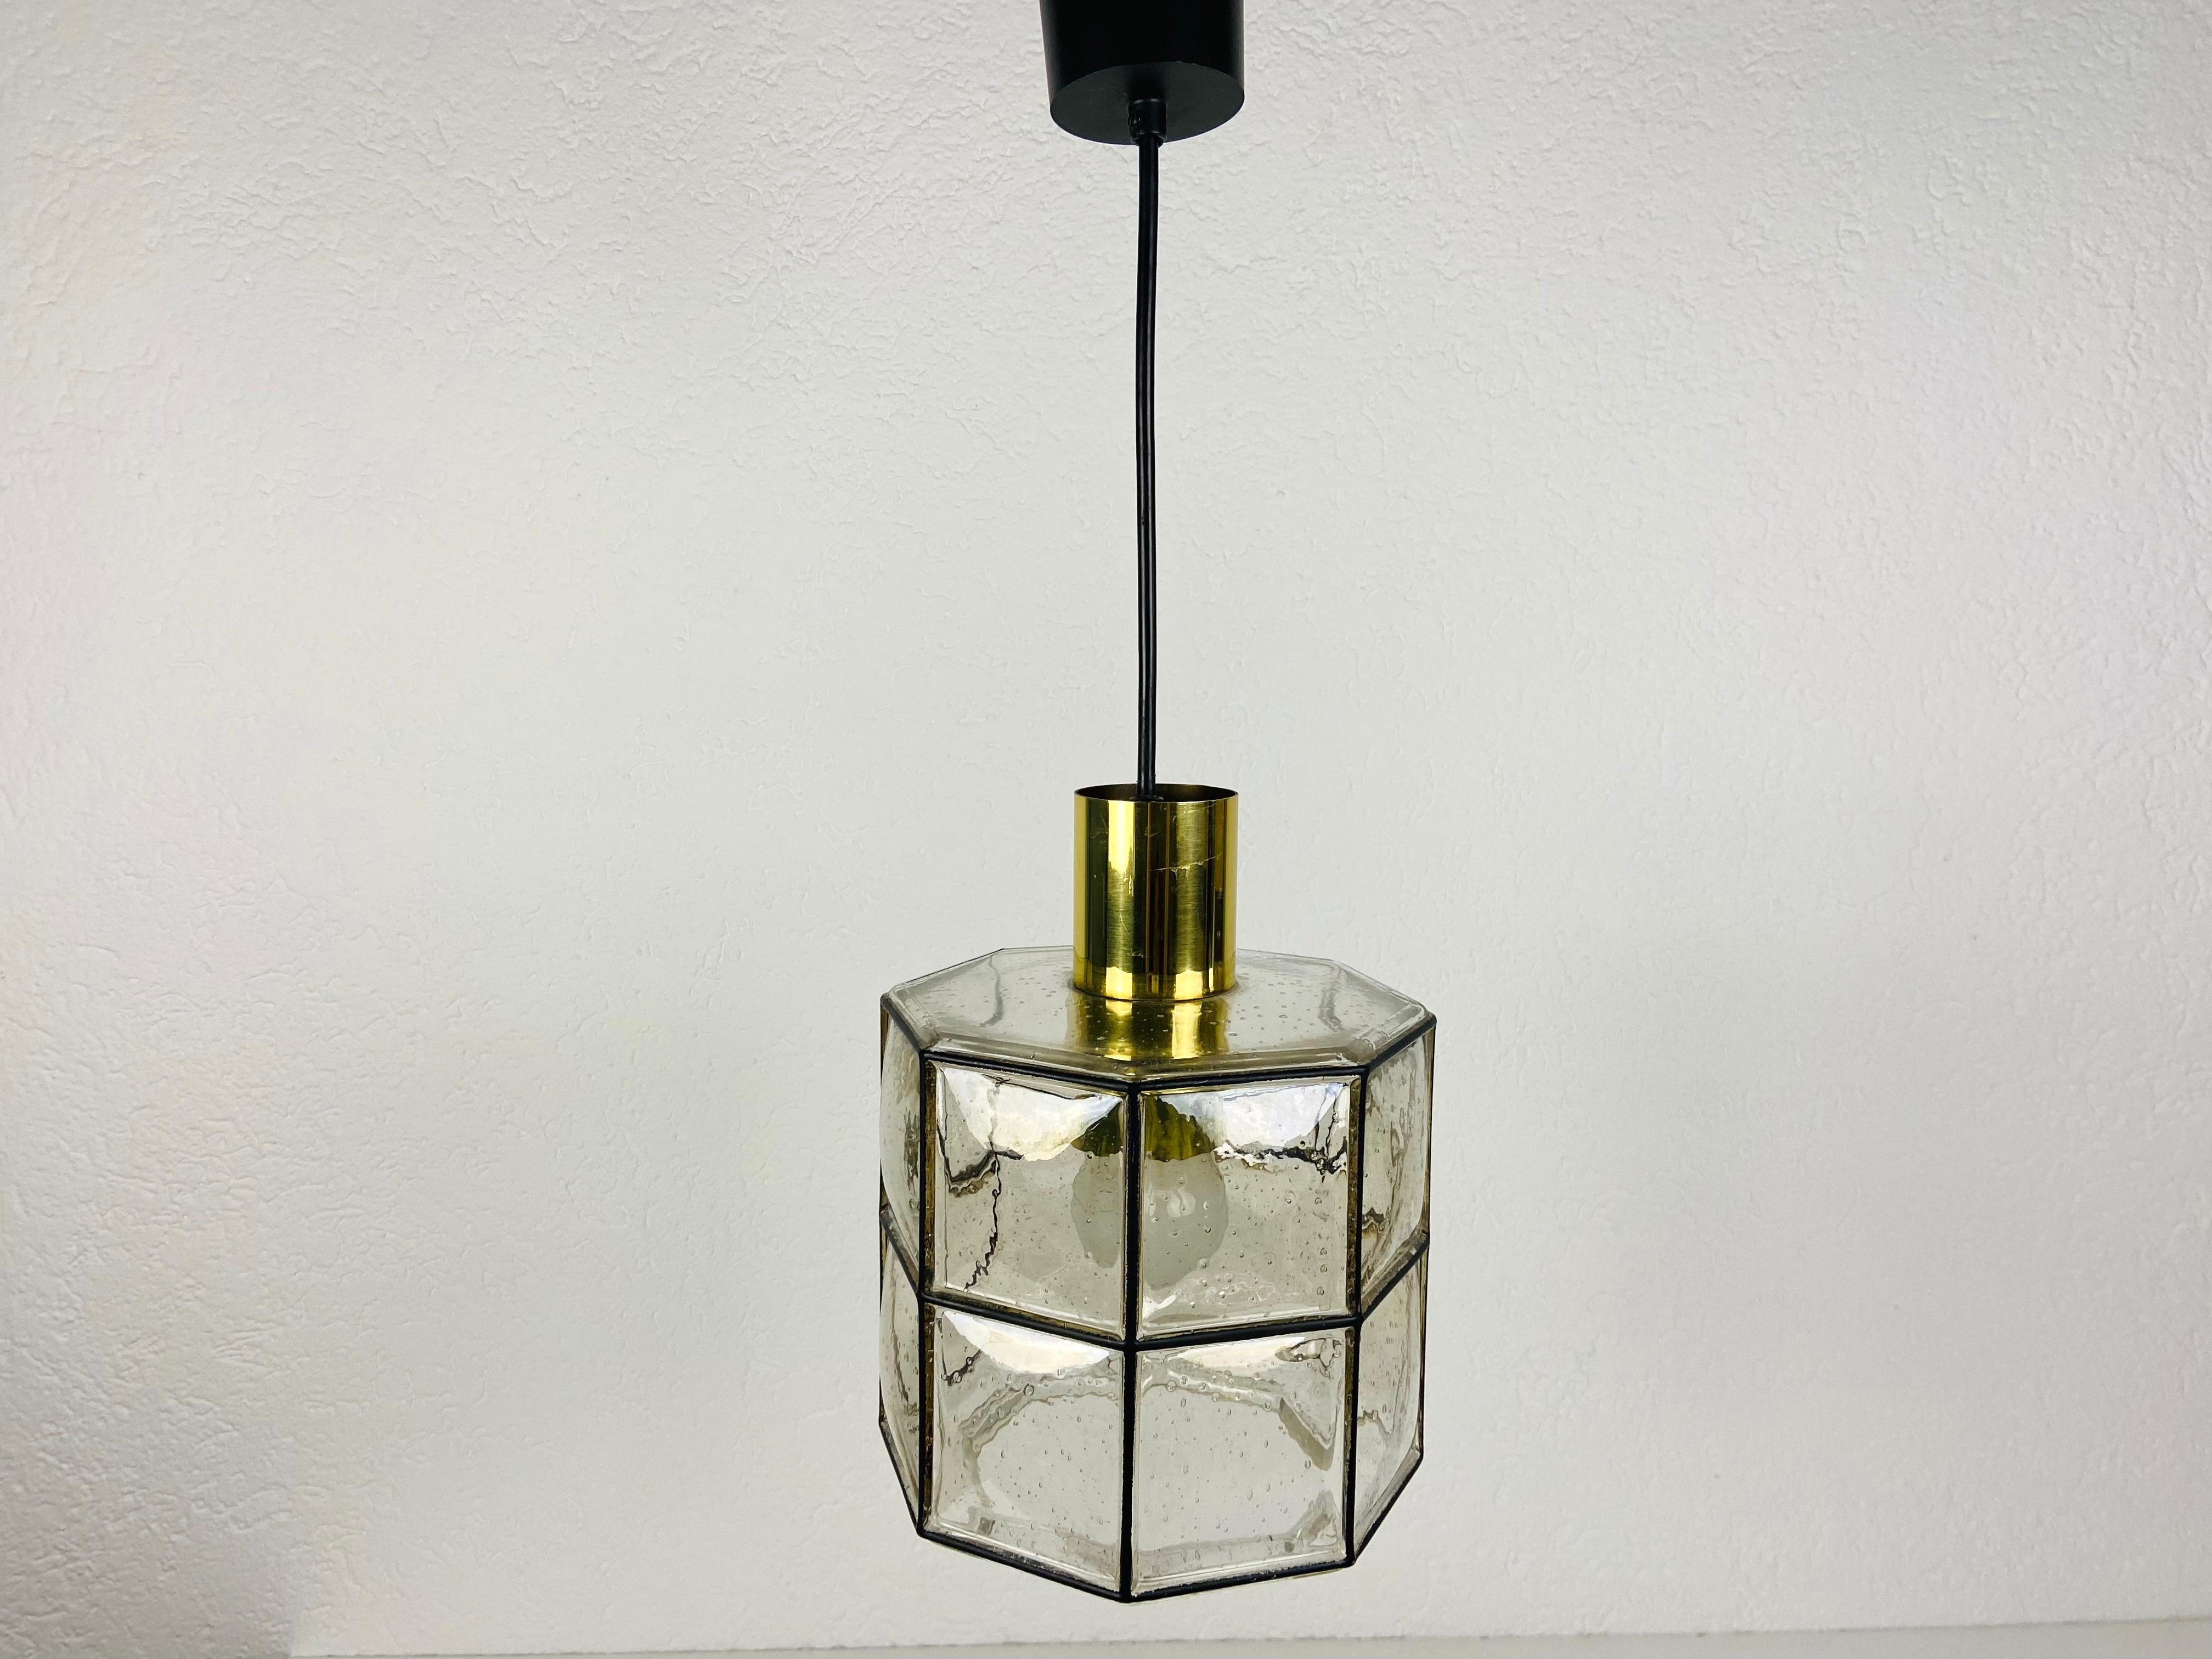 Midcentury Iron and Bubble Glass Pendant Lamp by Glashütte Limburg, 1960s For Sale 2